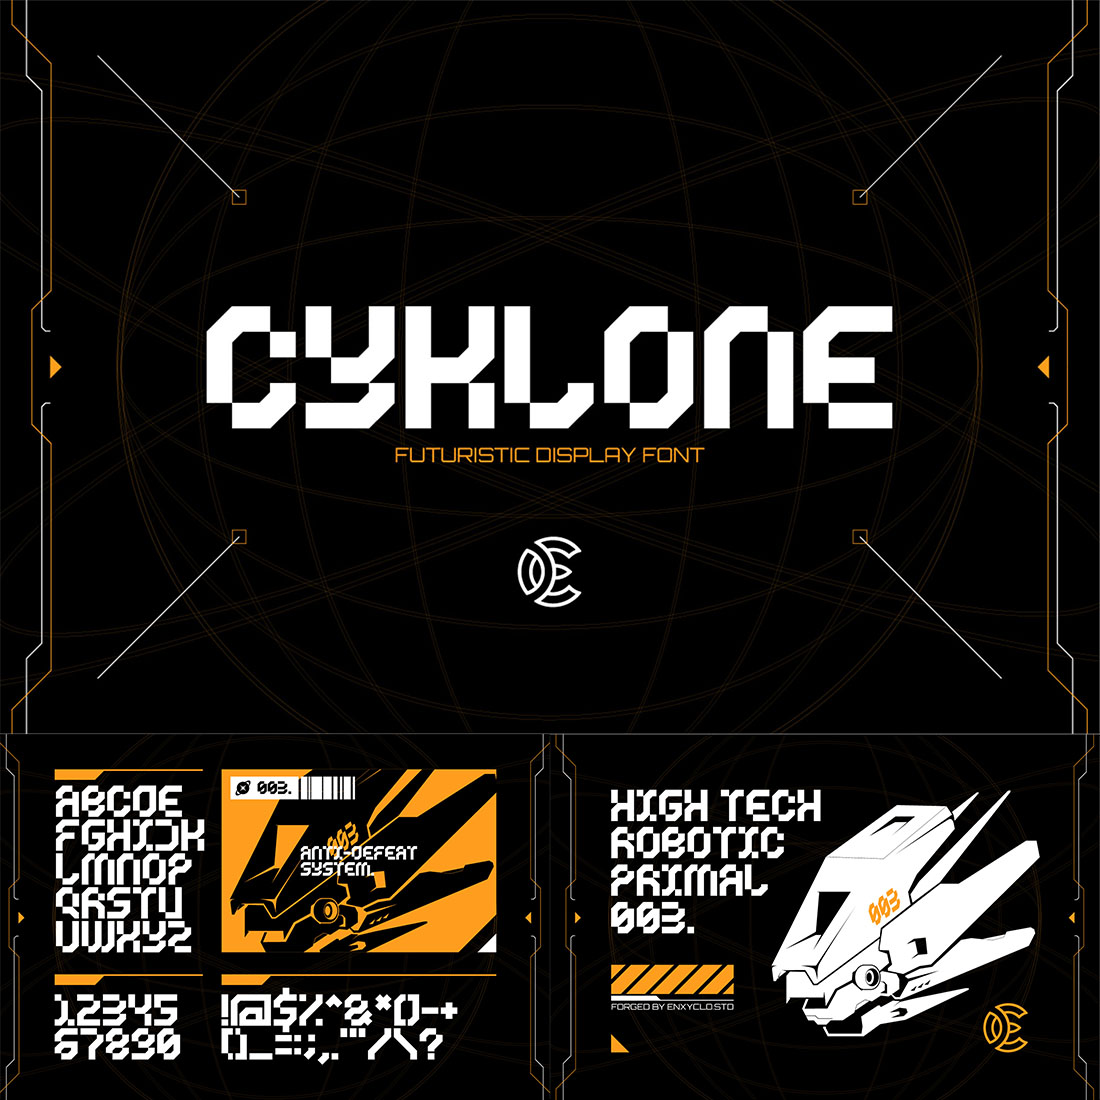 CYKLONE - Futuristic Display Font cover image.